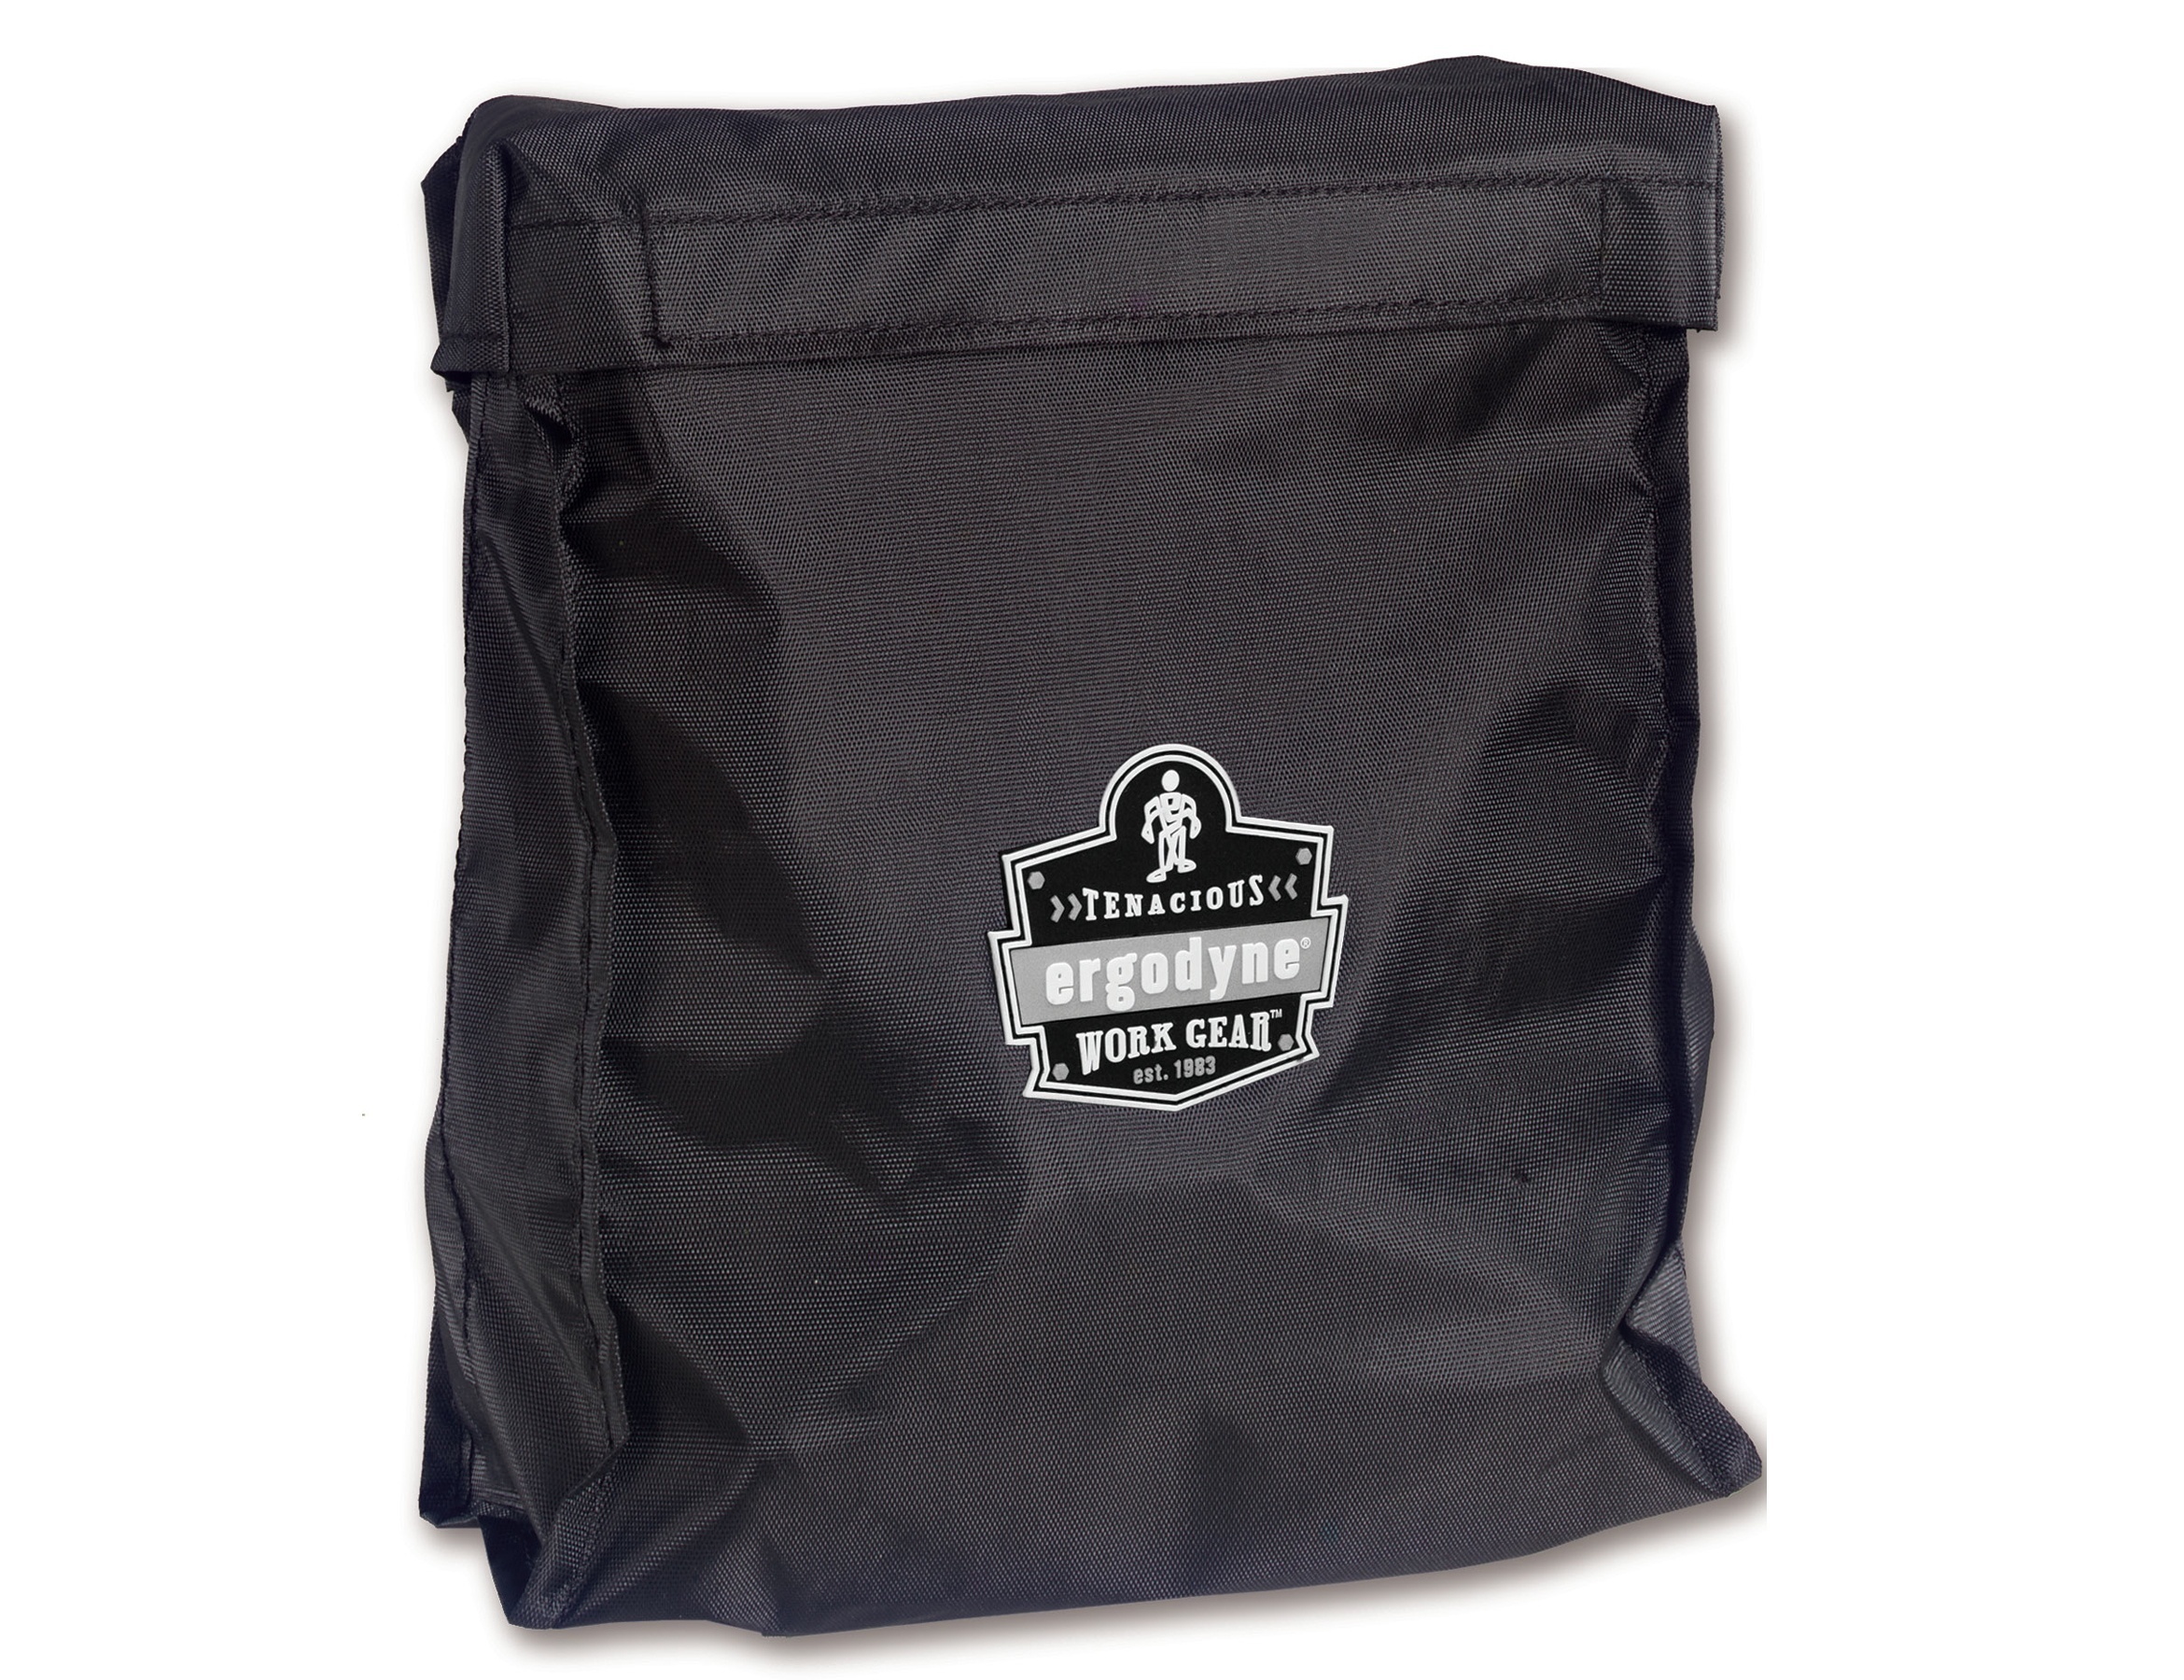 Ergodyne Arsenal Respirator Bag - Full Face from Columbia Safety